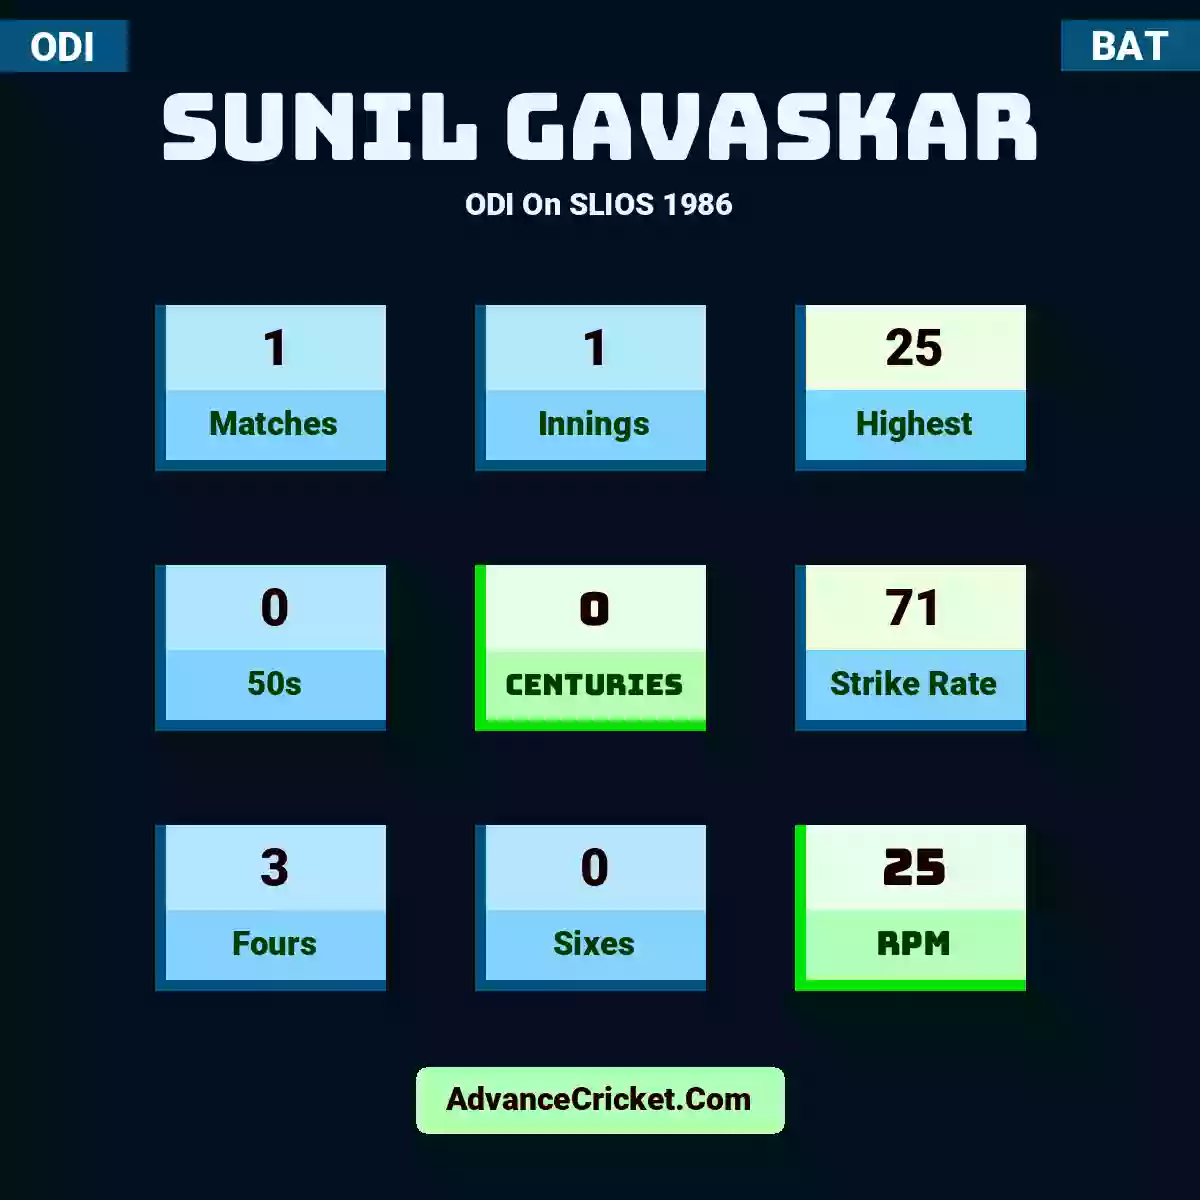 Sunil Gavaskar ODI  On SLIOS 1986, Sunil Gavaskar played 1 matches, scored 25 runs as highest, 0 half-centuries, and 0 centuries, with a strike rate of 71. S.Gavaskar hit 3 fours and 0 sixes, with an RPM of 25.